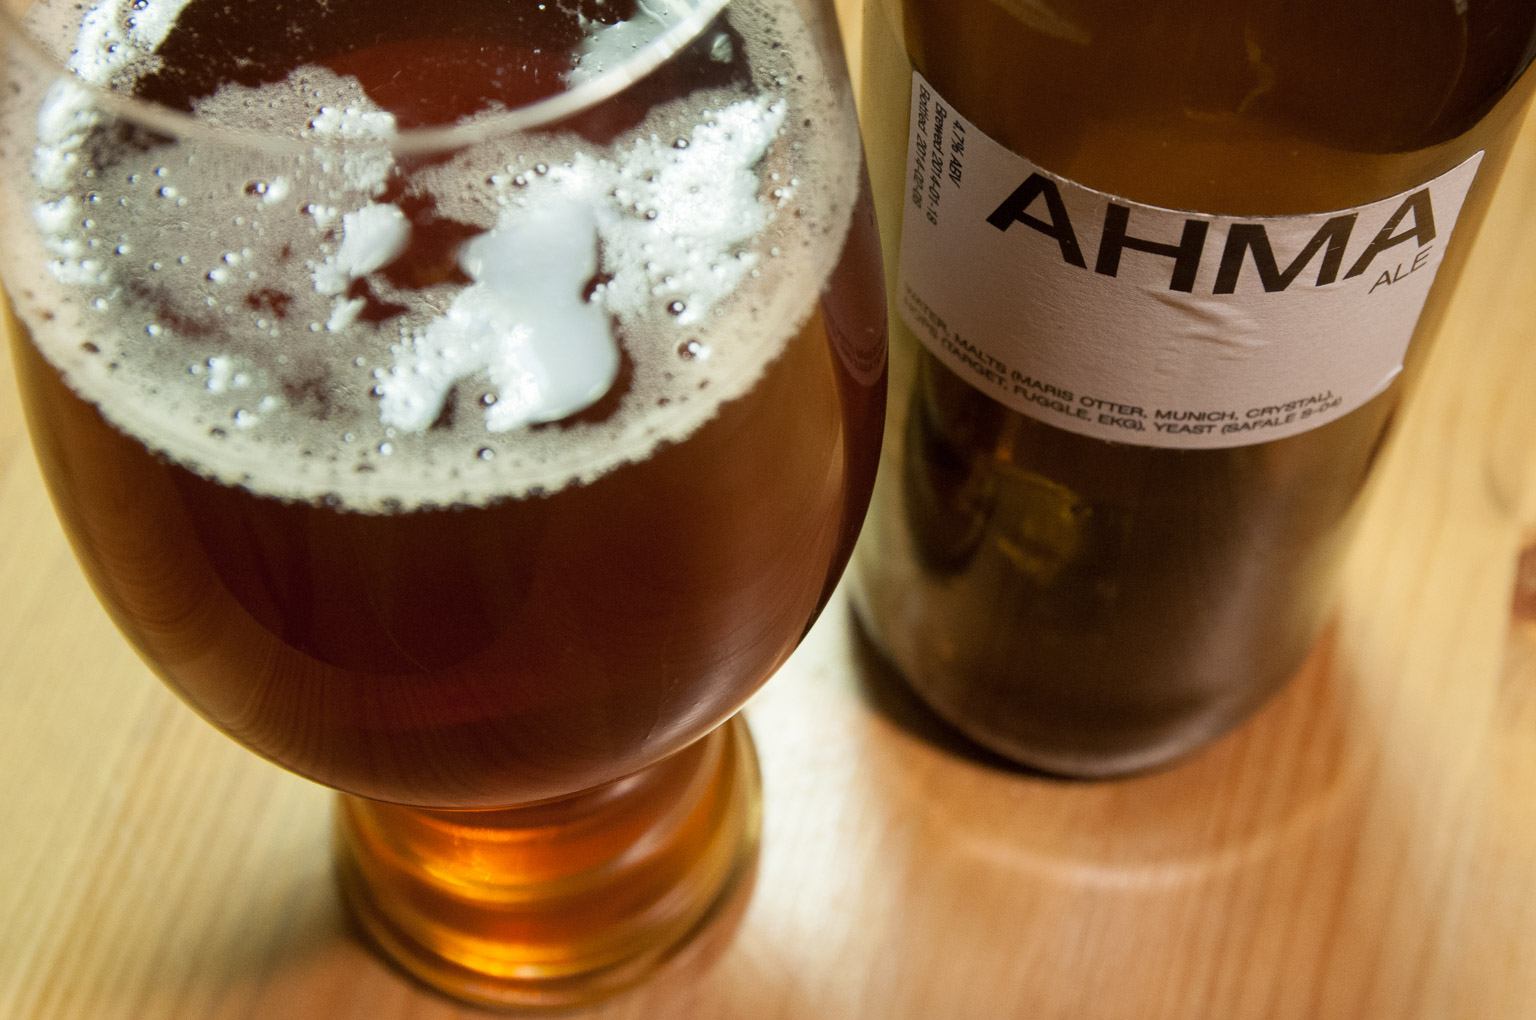 Ahma Ale bottle and glass